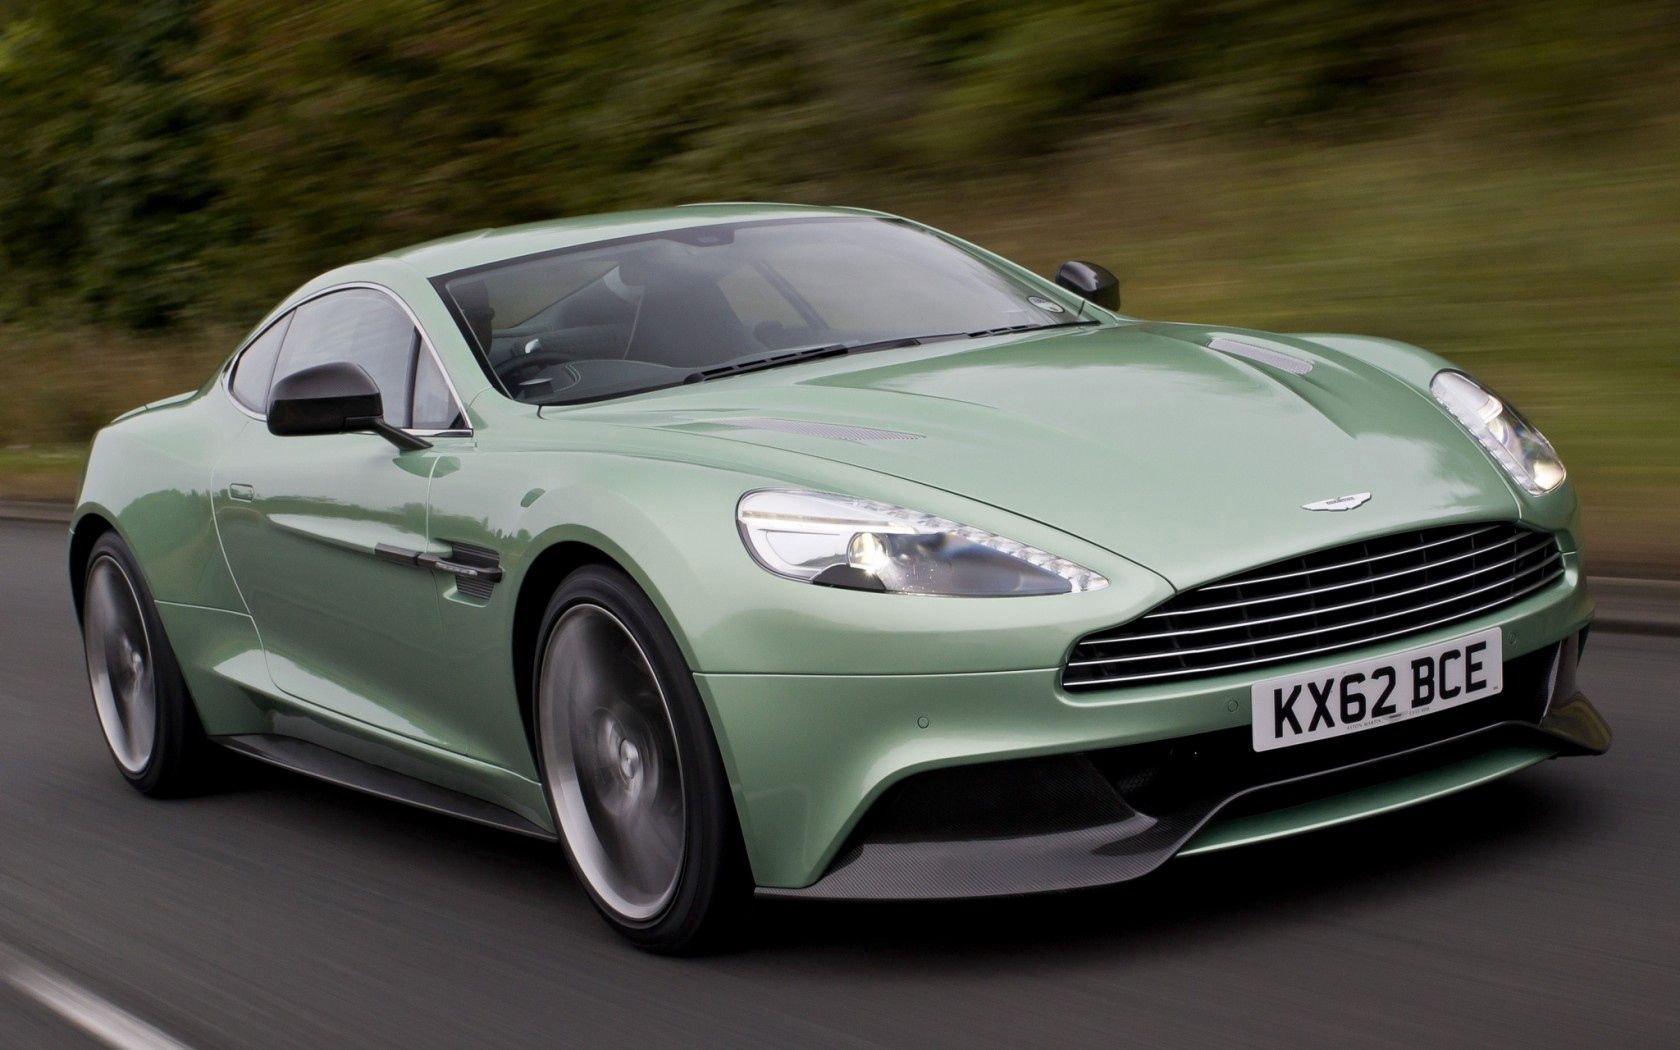 Скачать картинку Астон Мартин (Aston Martin), Тачки (Cars), Суперкар, Зеленый в телефон бесплатно.